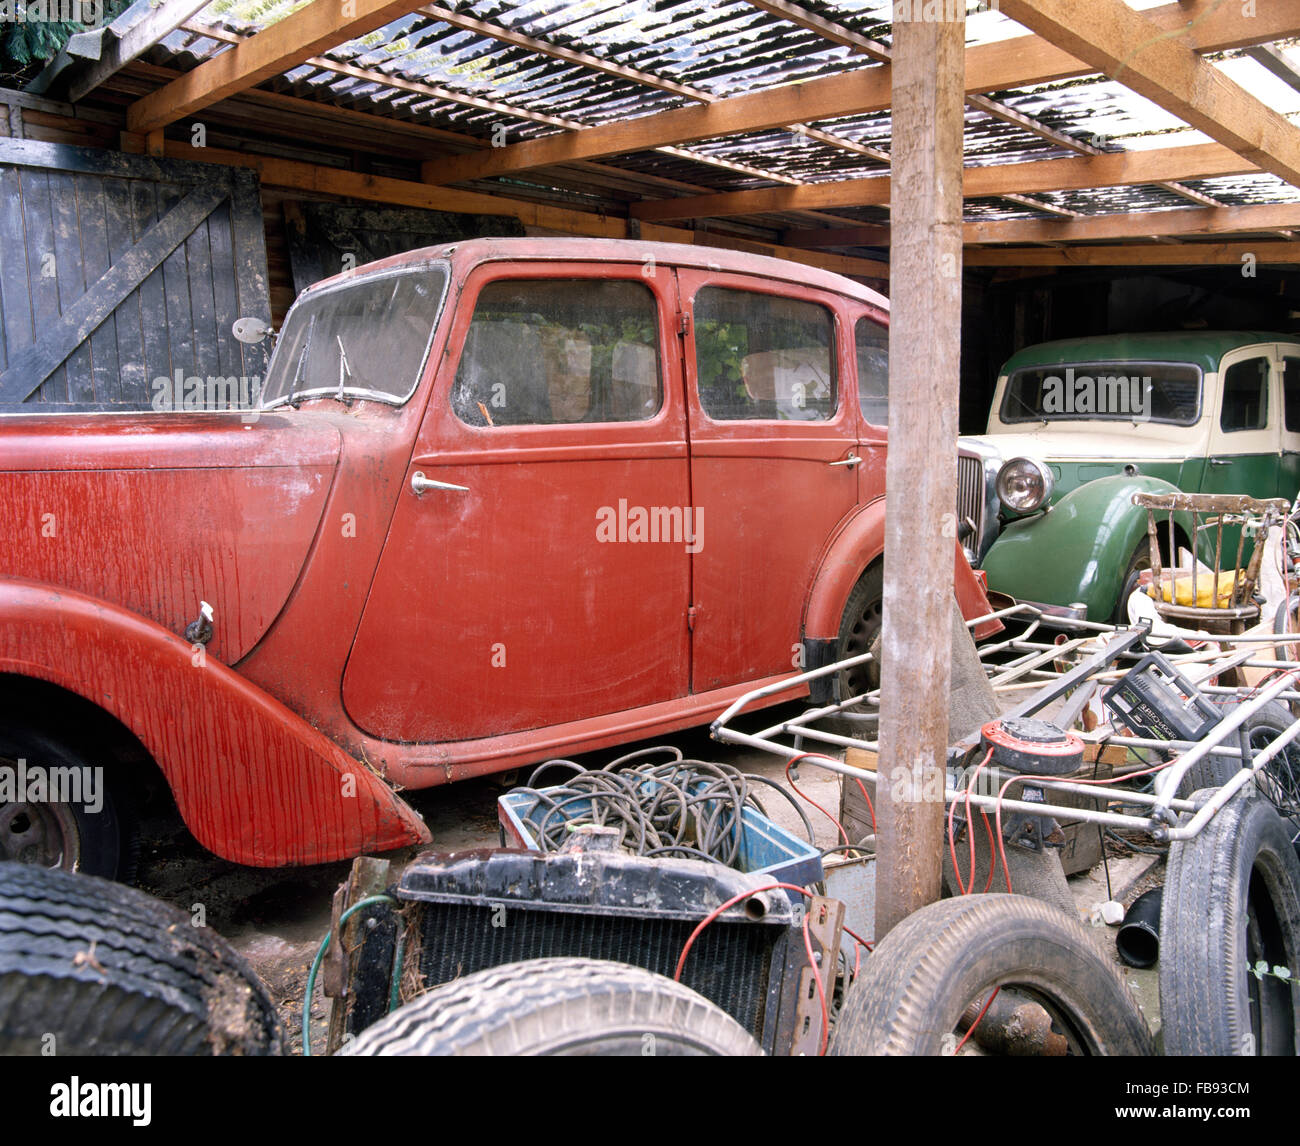 Oldtimer car in garage Stock Photo - Alamy